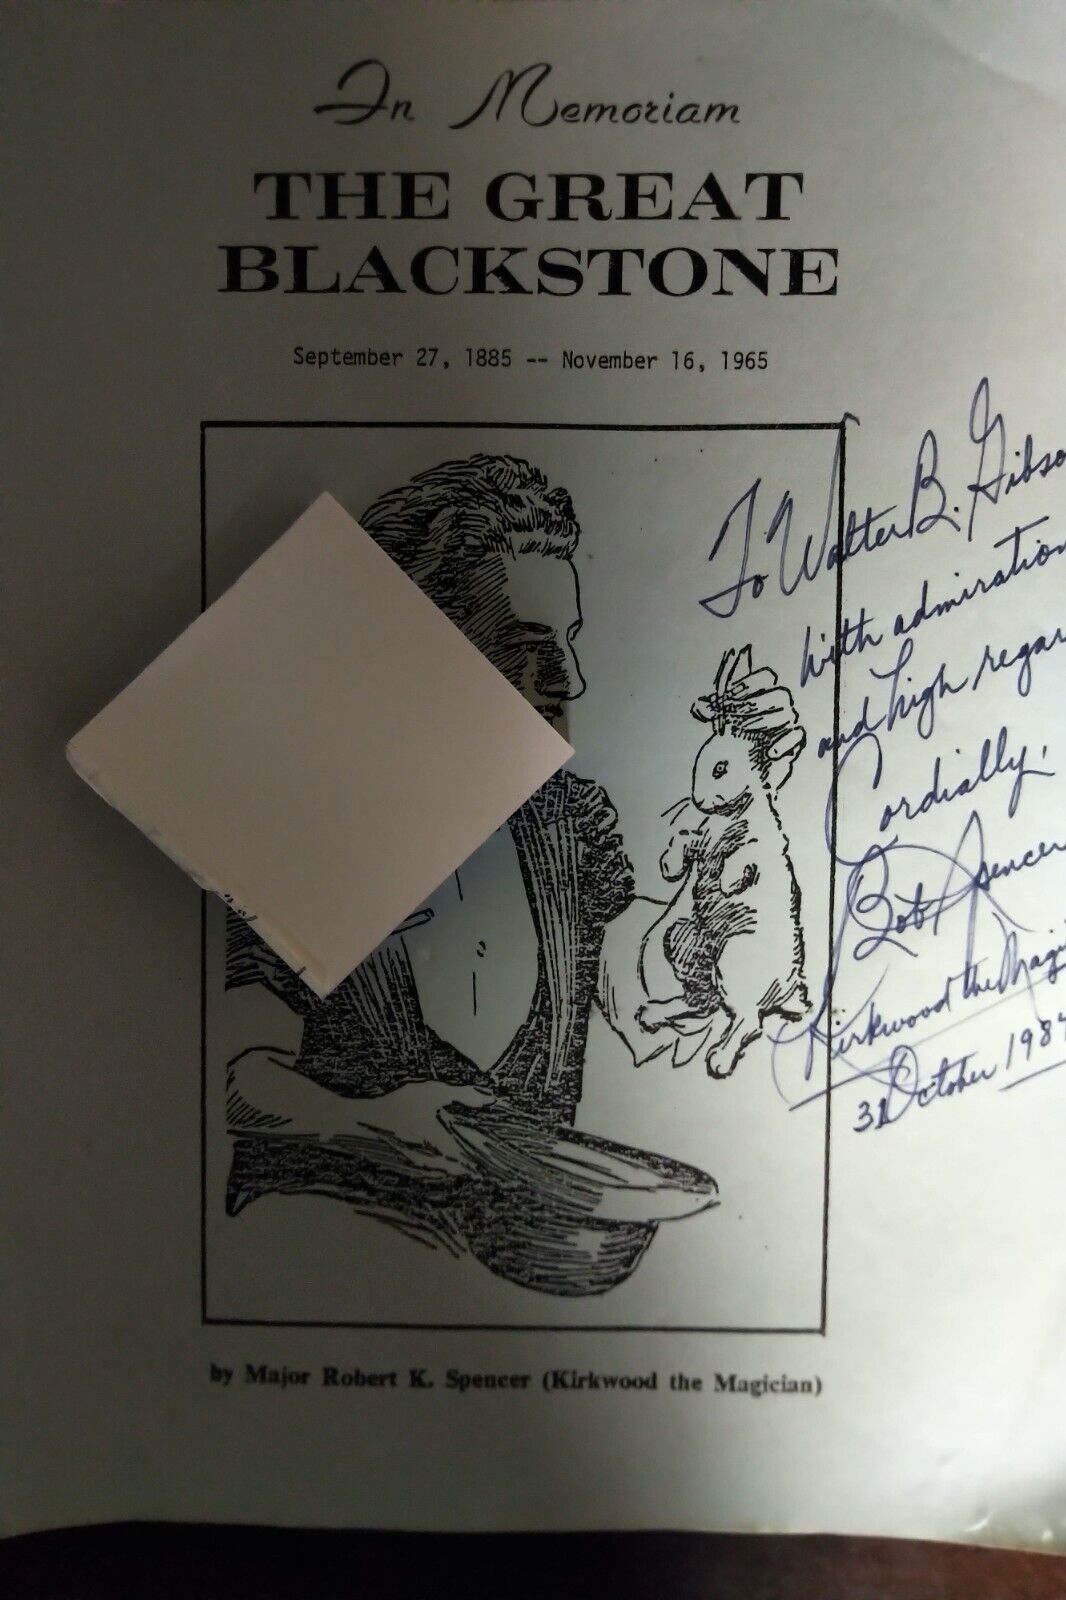 Autographed Original Program In Memoriam Service for The Great Blackstone 1965